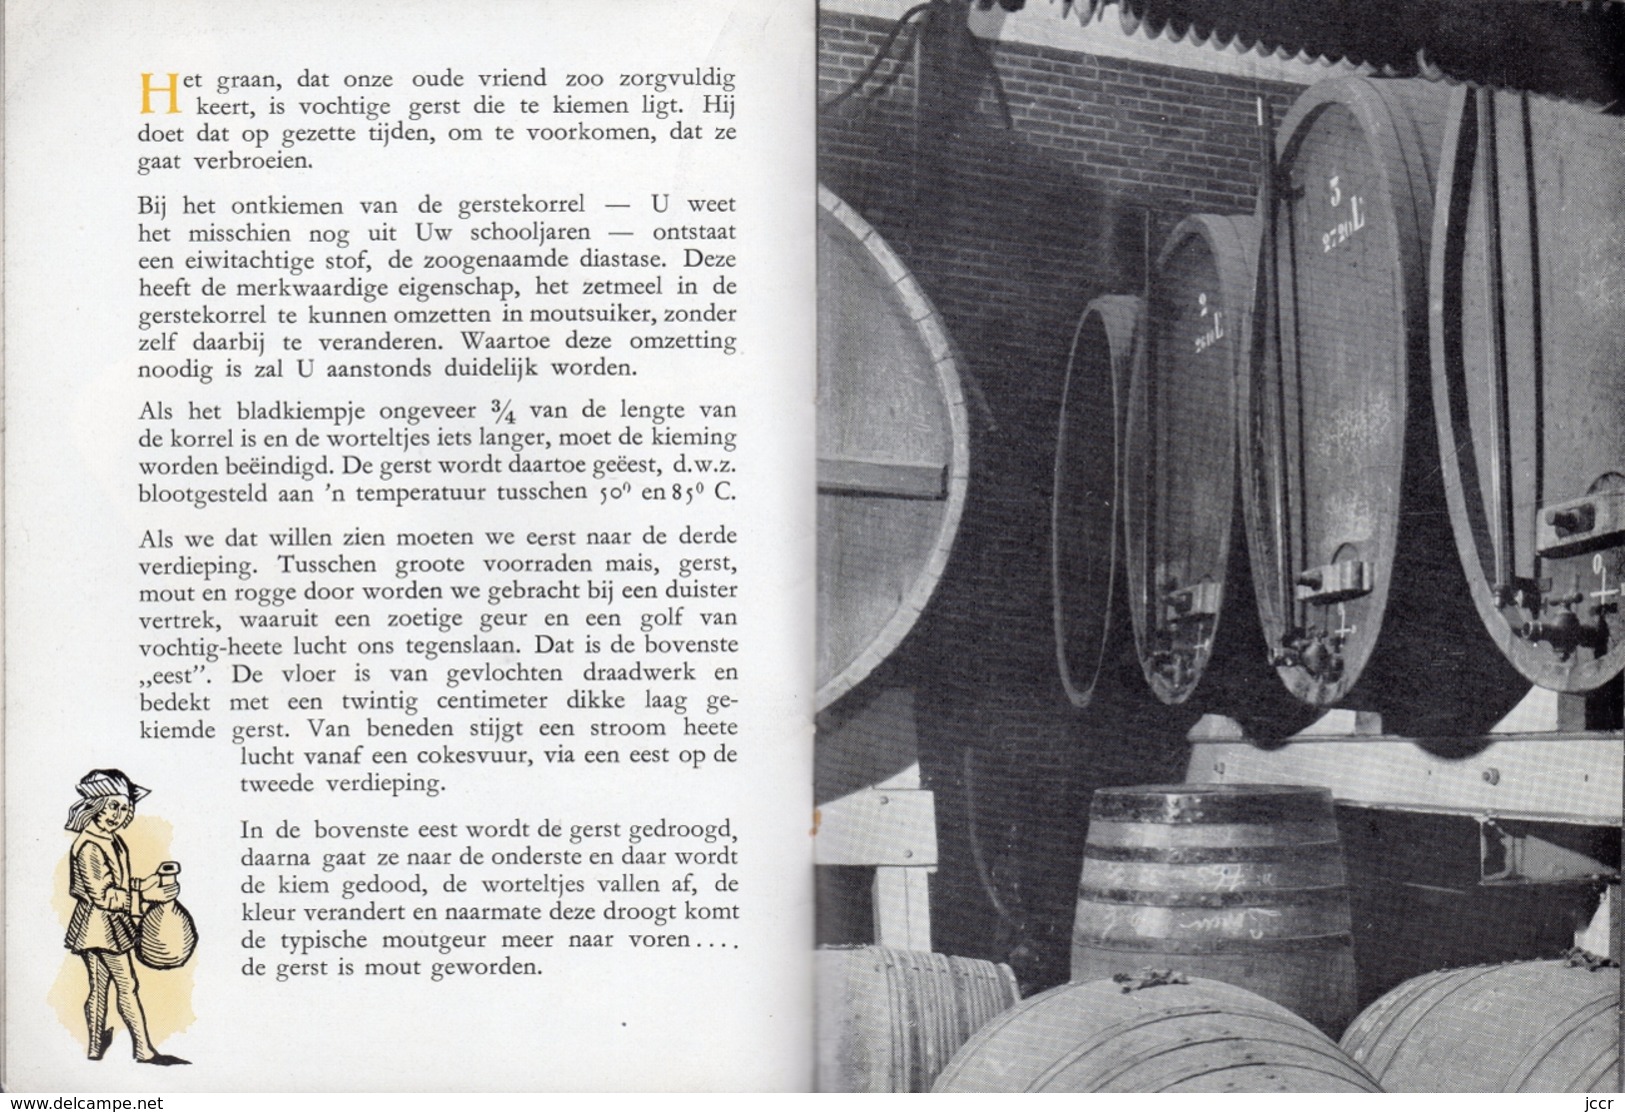 Bols Z.o.g. (zeer Oude Genever) (genièvre) - Vers 1960 - Culinaria & Vinos